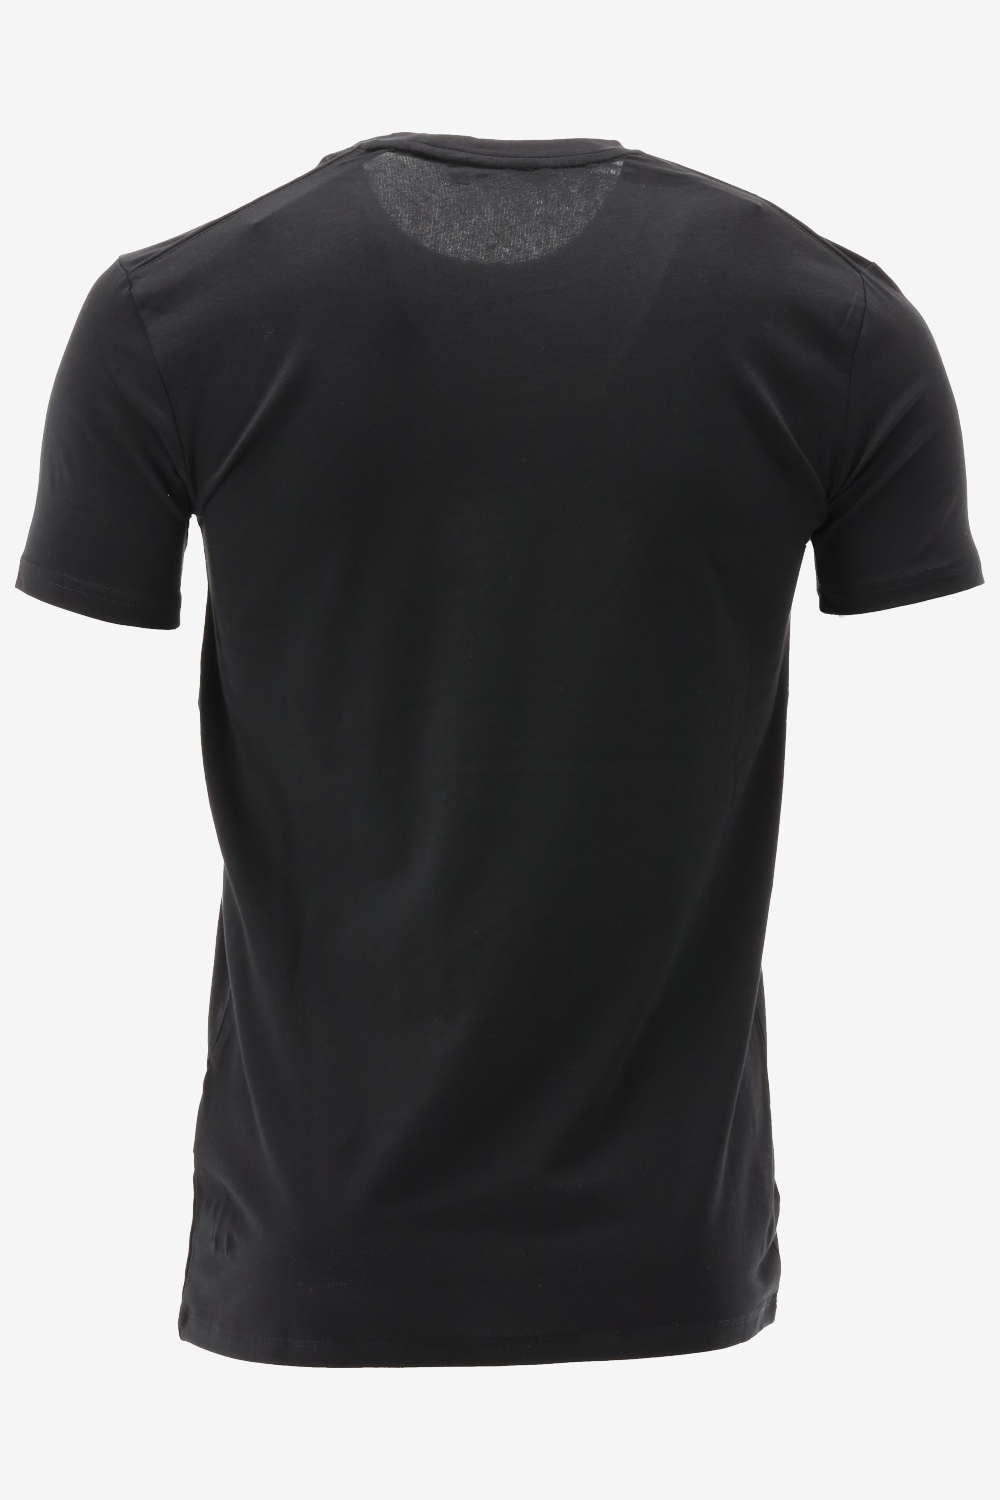 Antony Morato T-shirt BASIC